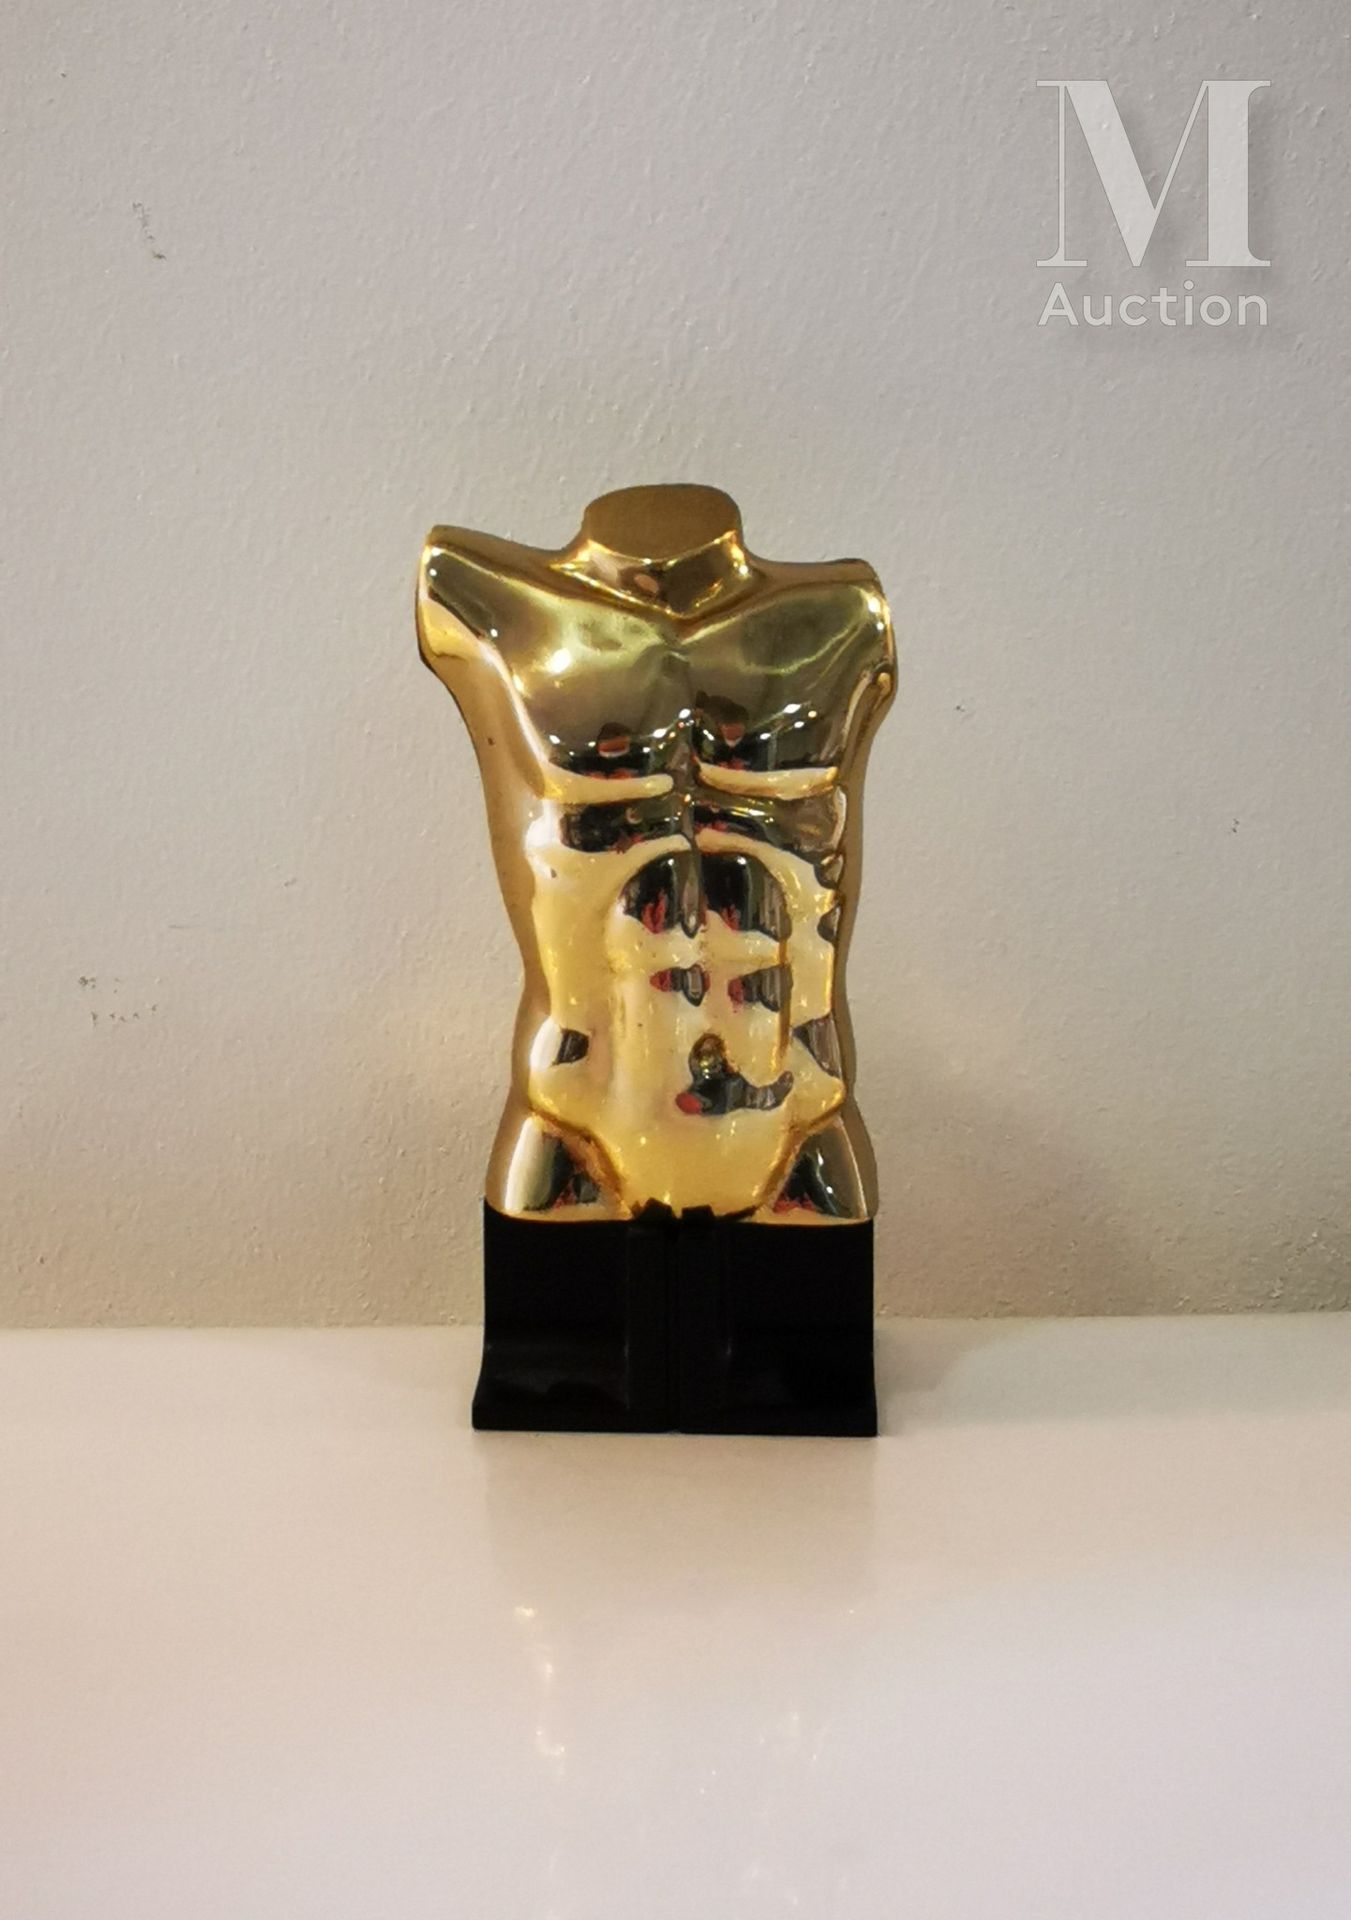 Miguel BERROCAL (1933-2006) 上腹躯干 - 1989年

镀金和抛光的黄铜雕塑，有签名和编号2756

限量发行5000册

15 x&hellip;